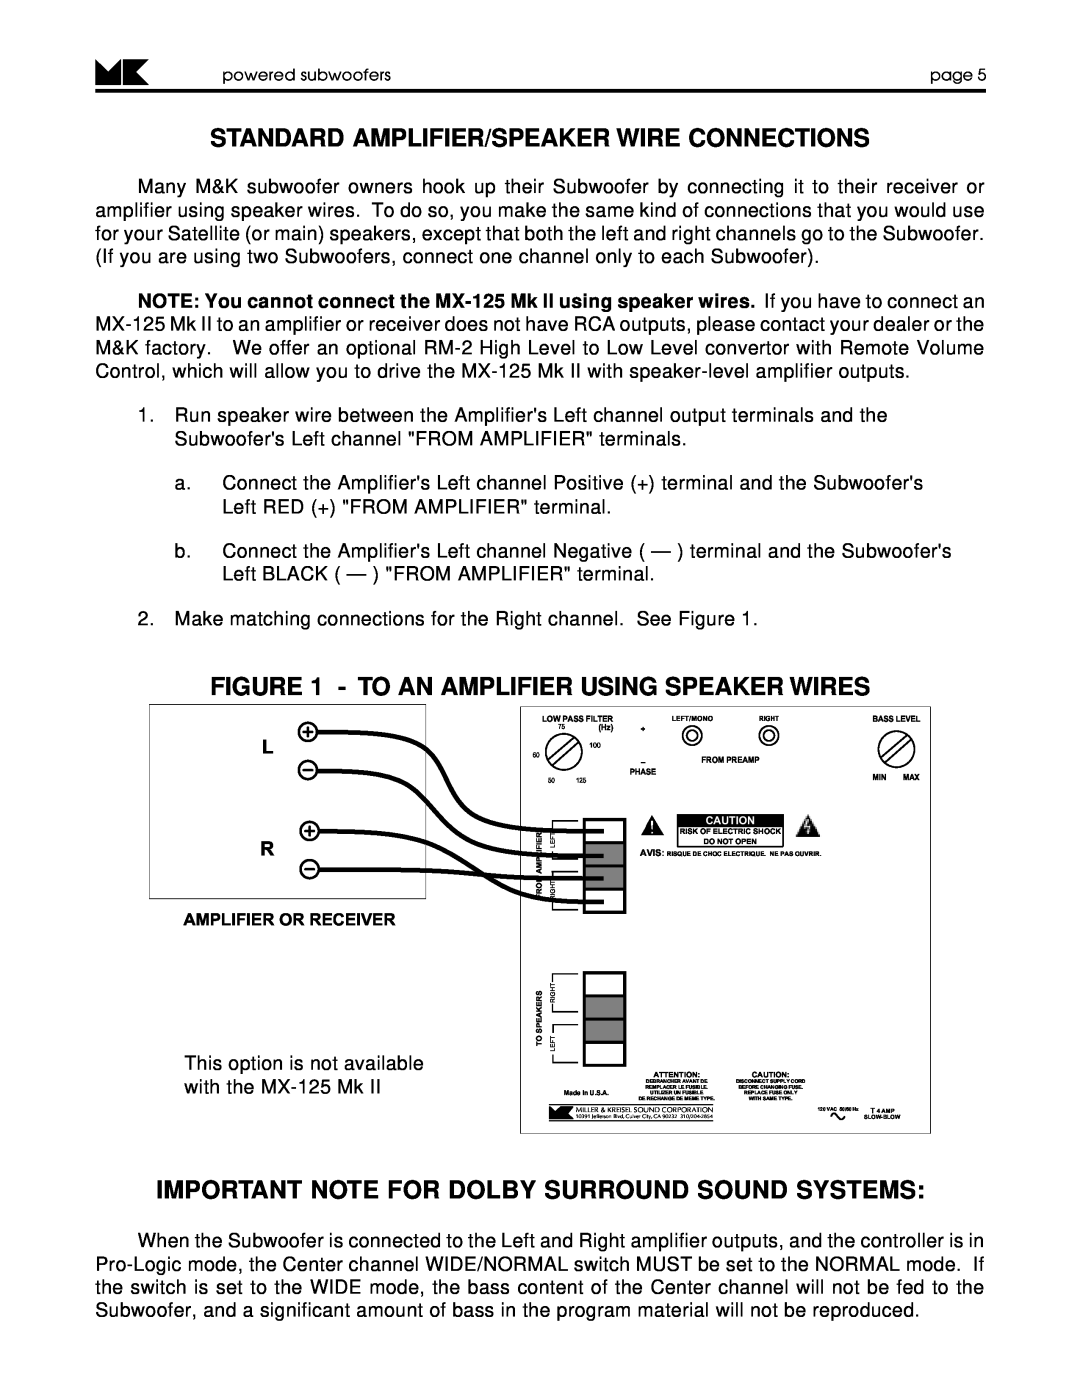 MK Sound V-125, V-75 MK II, MX-125 MK II Standard Amplifier/Speaker Wire Connections, To An Amplifier Using Speaker Wires 